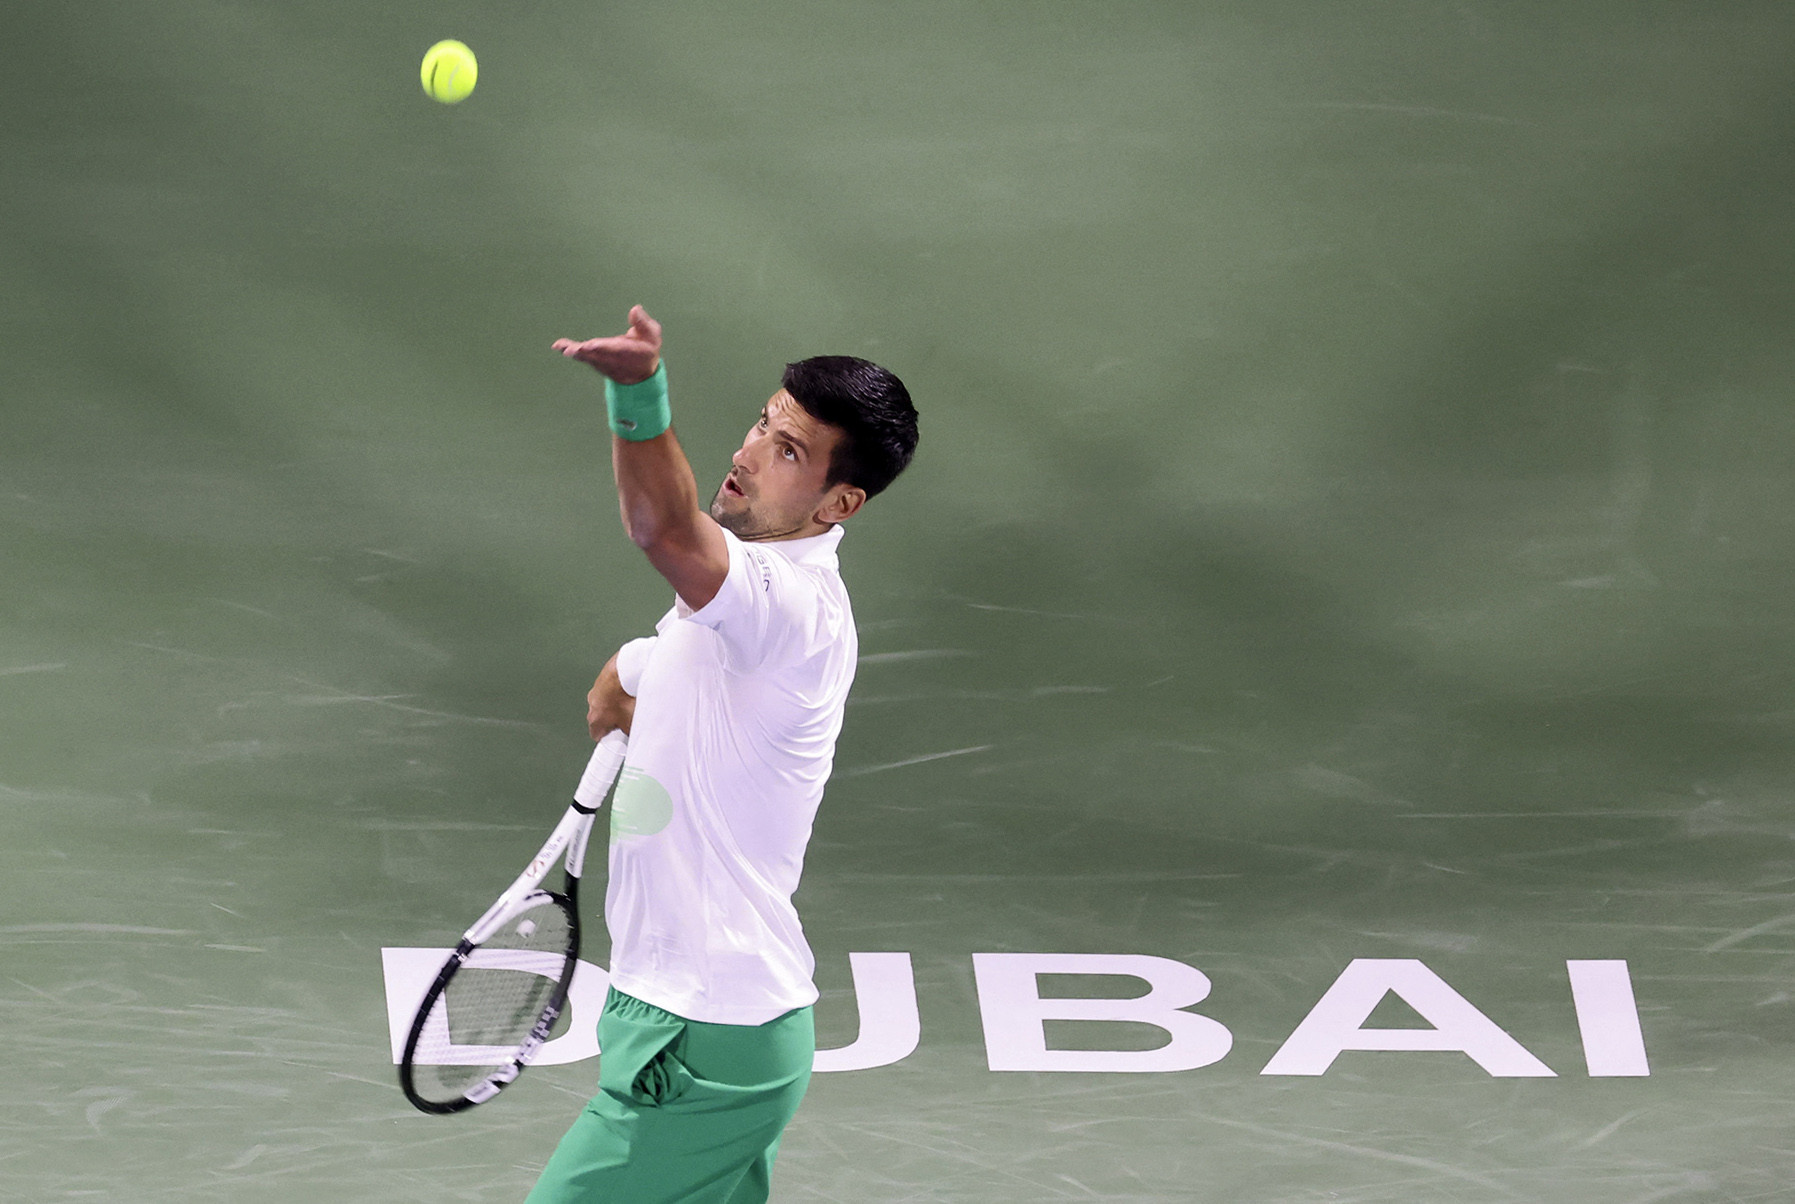 Djokovic victorious in first match since Australian Open deportation saga